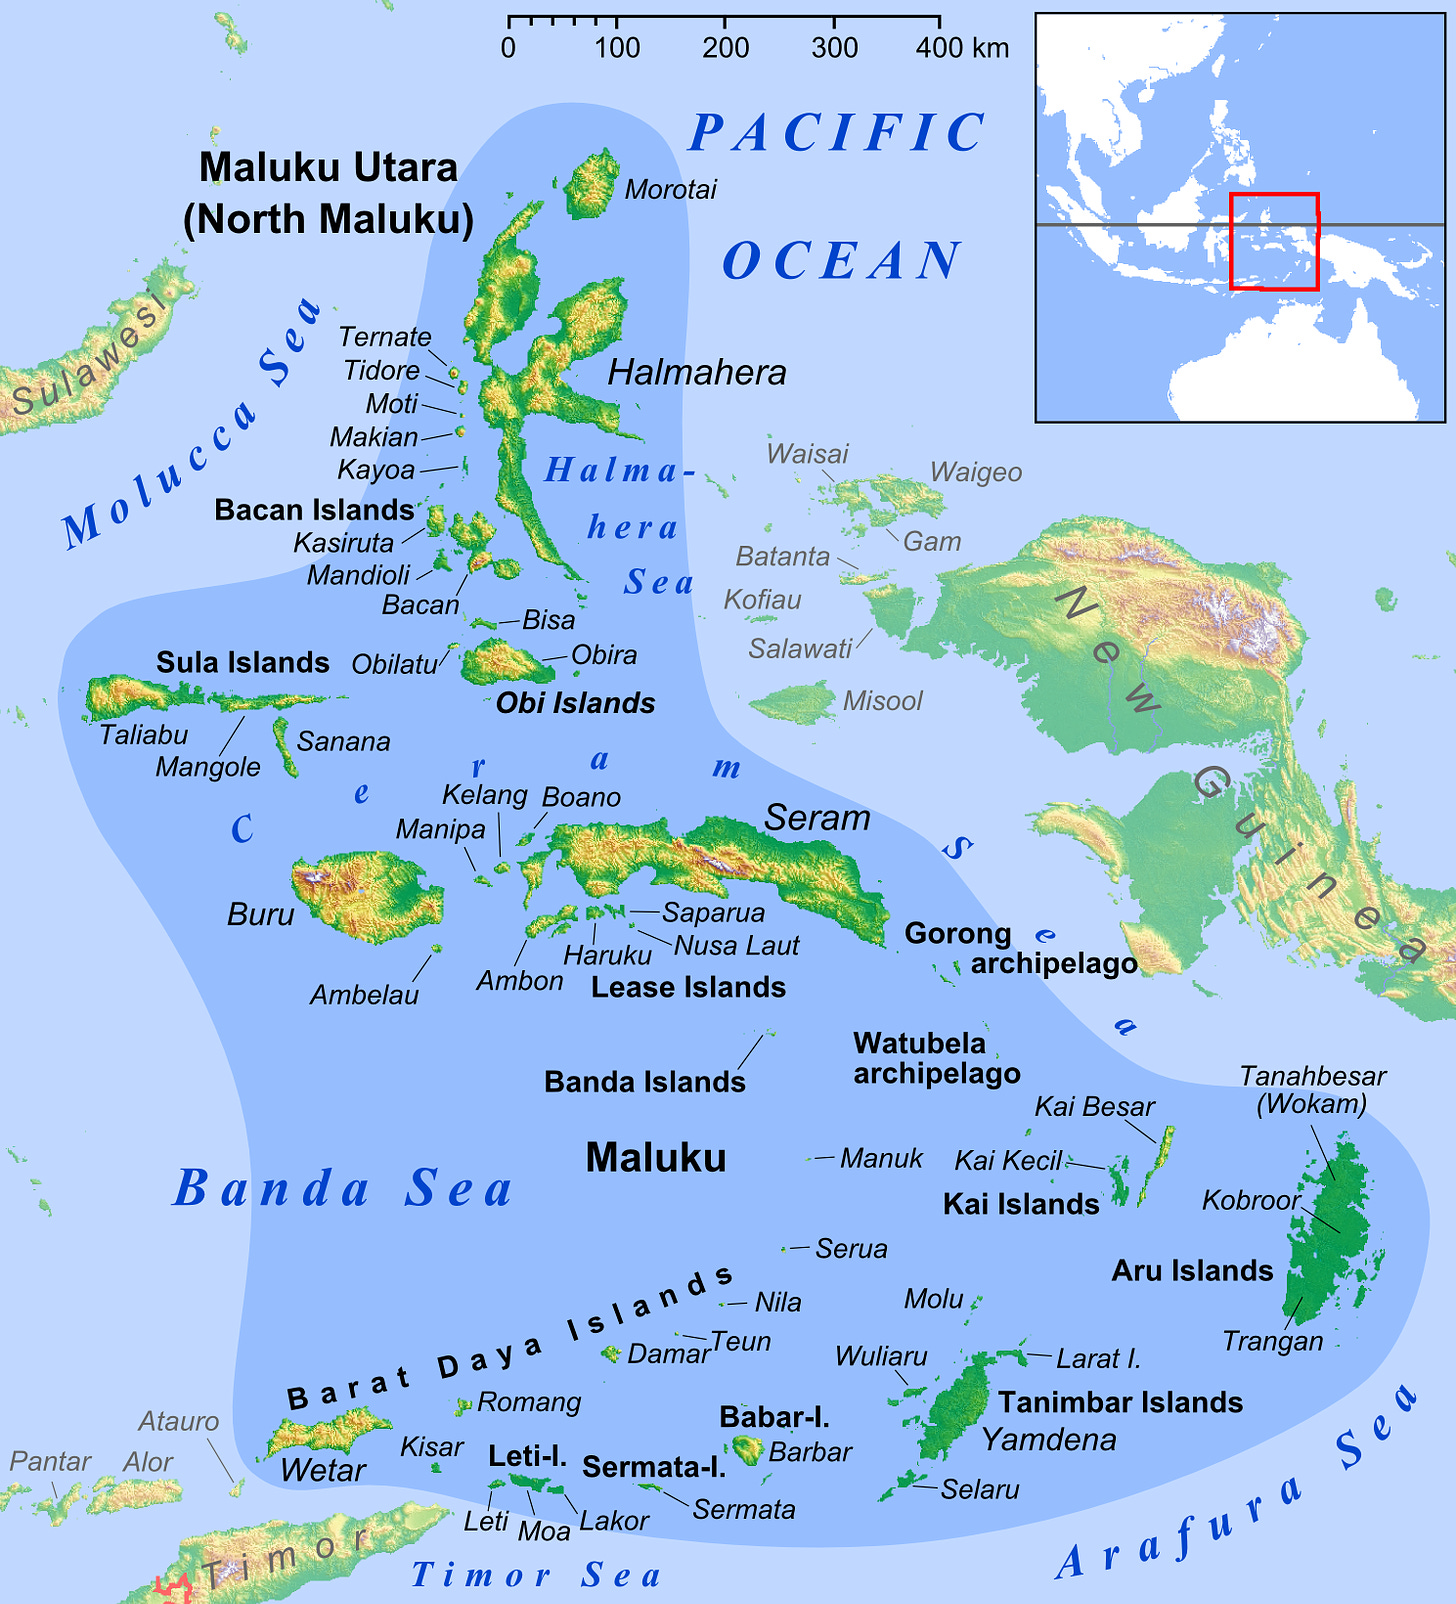 https://upload.wikimedia.org/wikipedia/commons/f/f5/Maluku_Islands_en.png